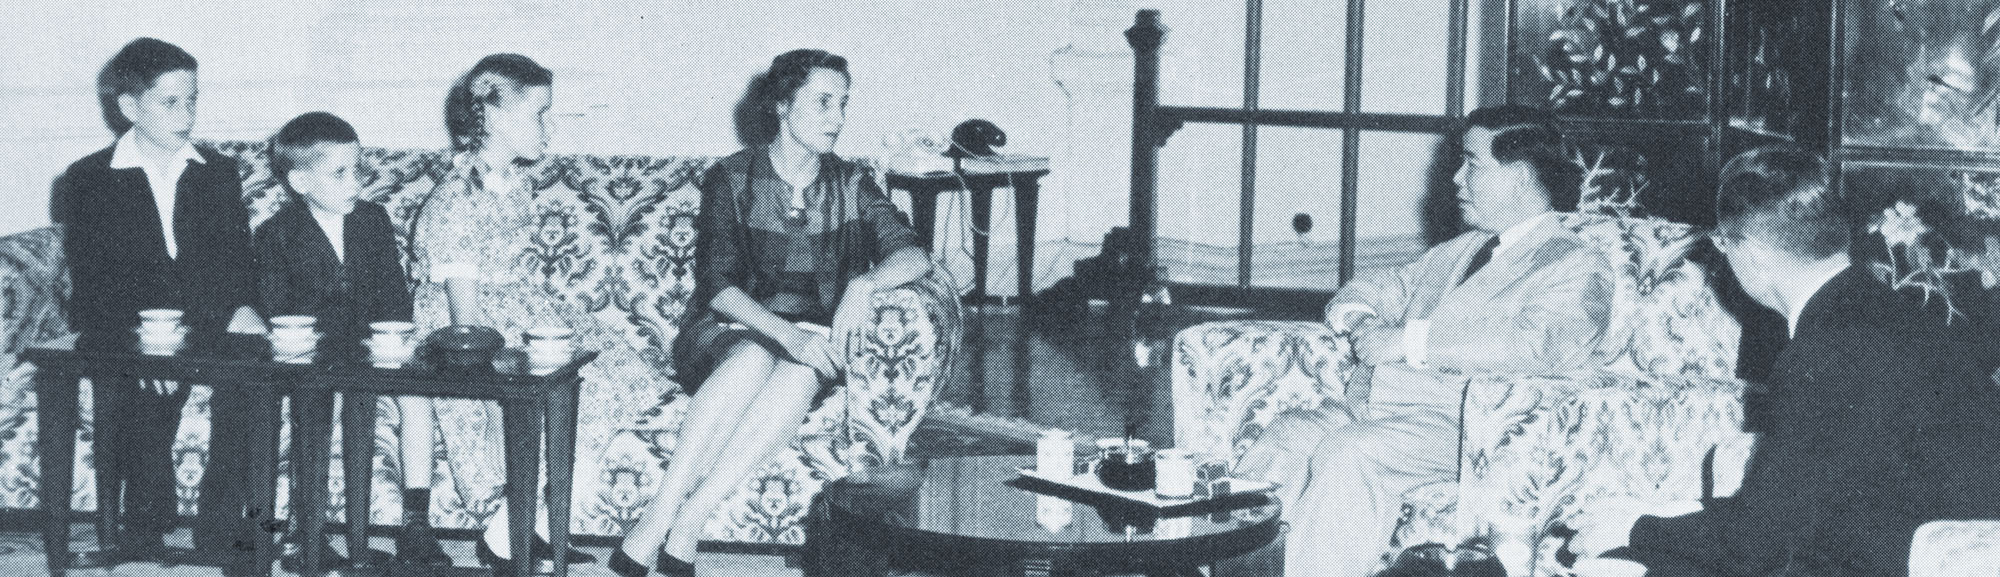 Barbara-Colby-Vietnam with President Ngo Dinh Diem